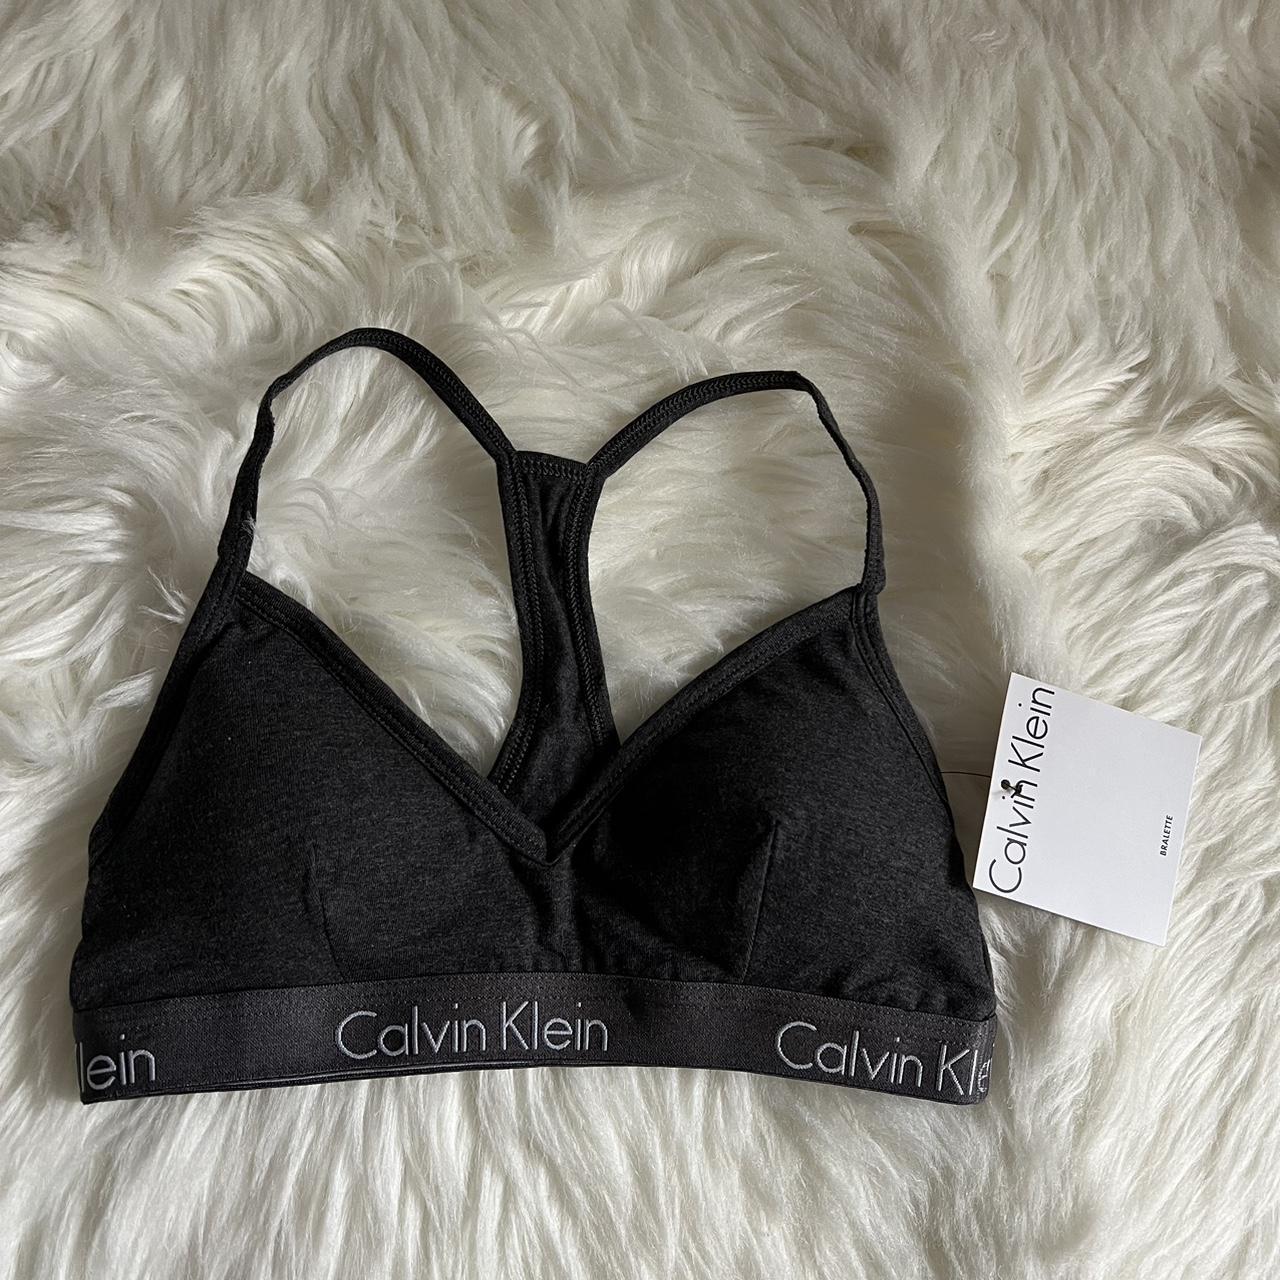 Calvin Klein Bralette NWT, Size Small, Dark gray